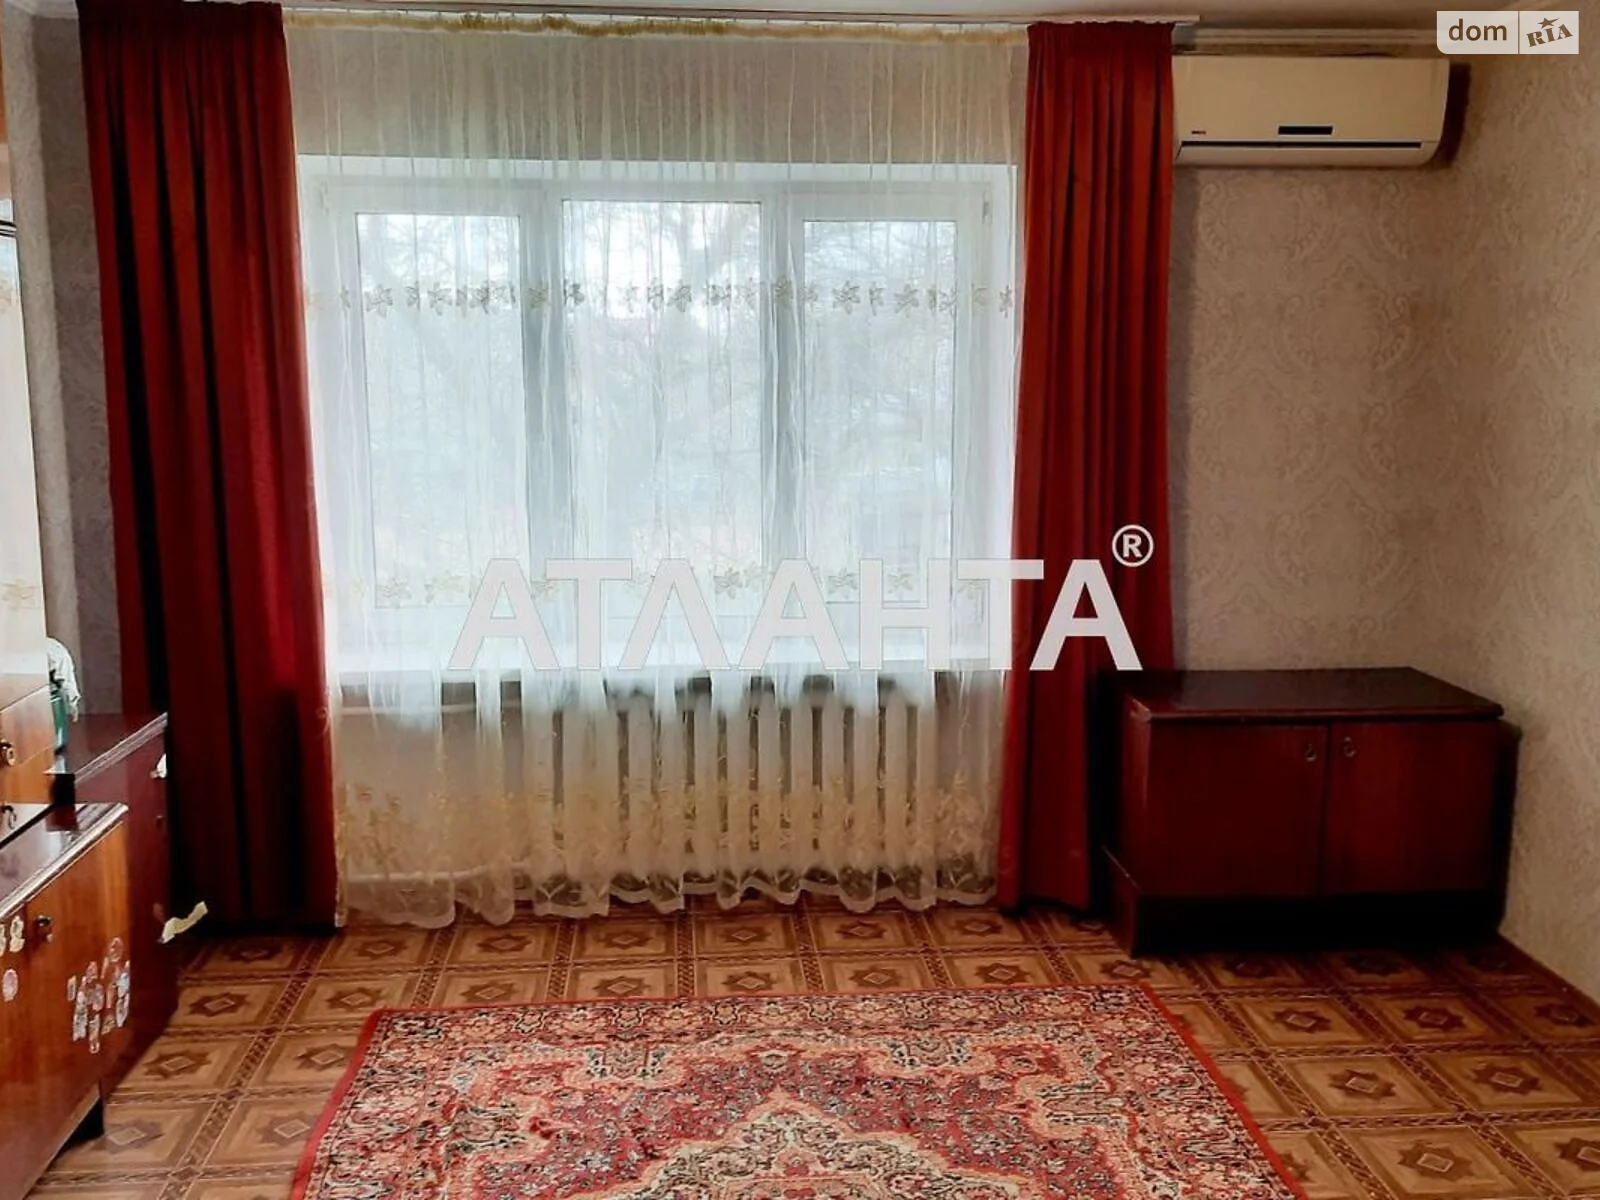 Продается комната 29.6 кв. м в Одессе, цена: 15500 $ - фото 1